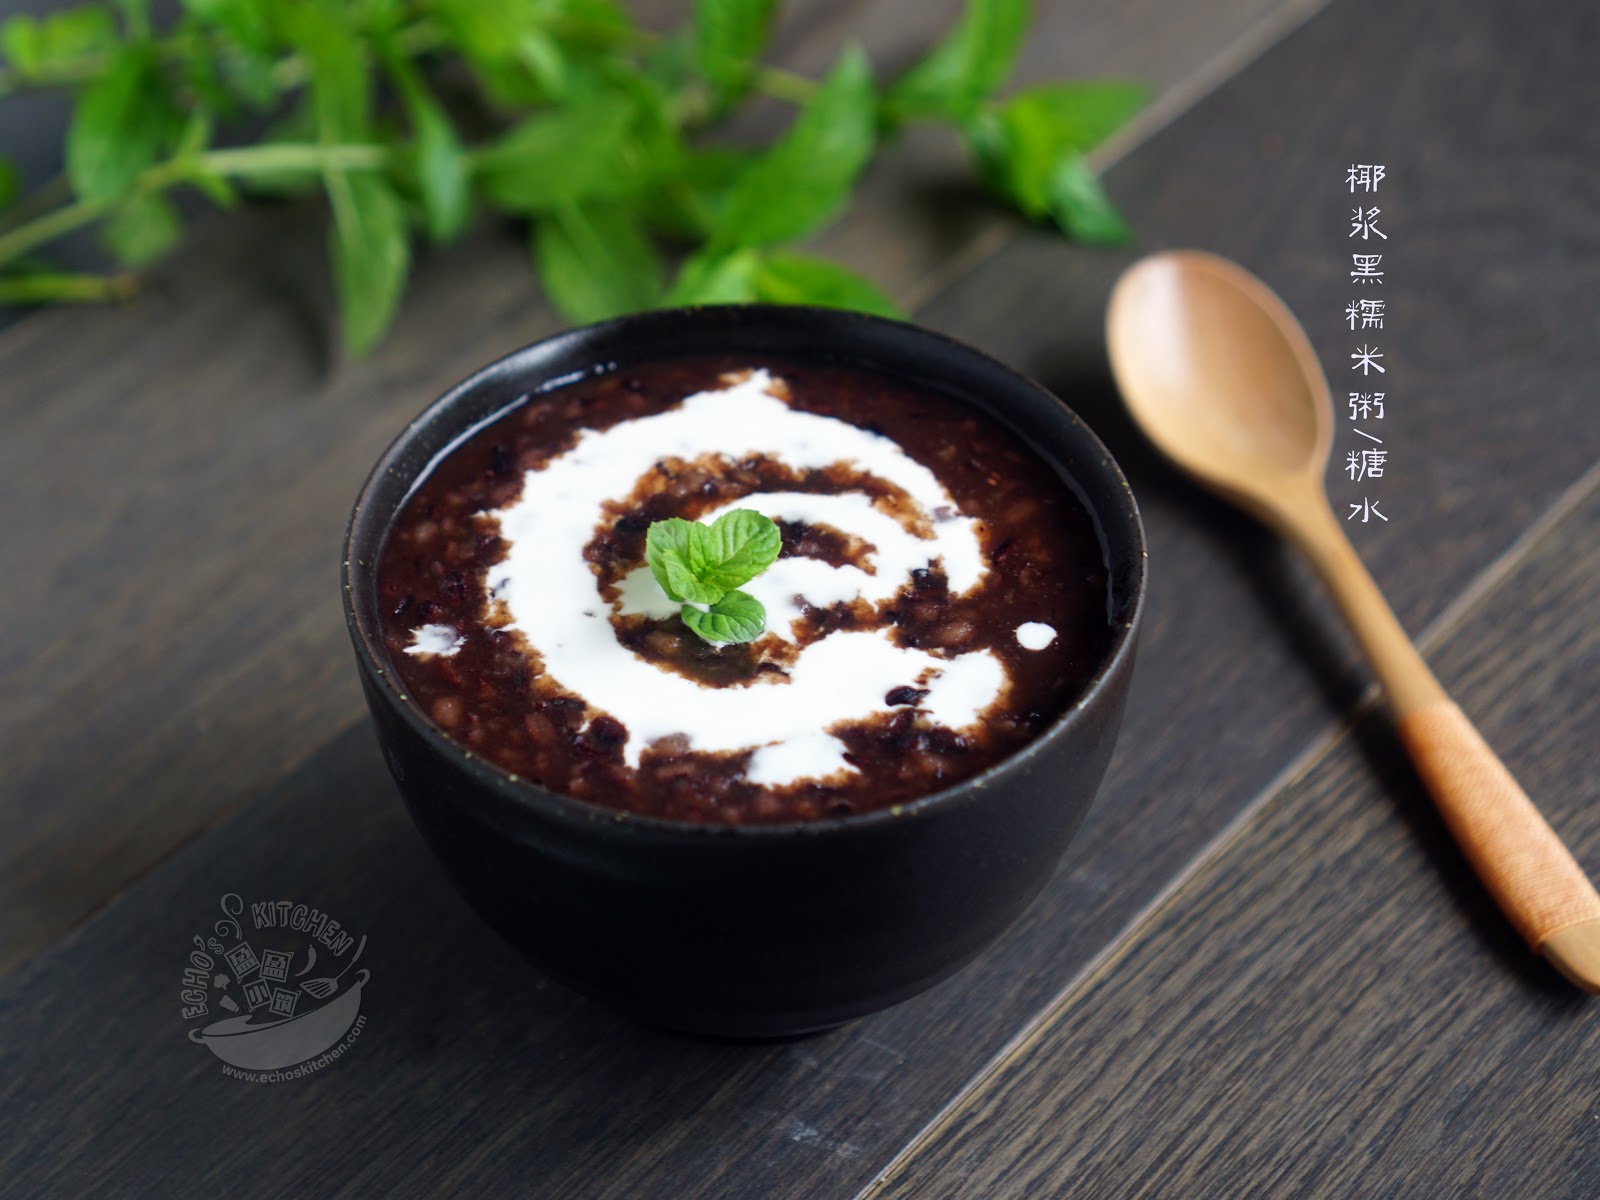 Kit Wai's kitchen : 椰汁黑糯米粥 ~ Black Glutinous Rice Dessert